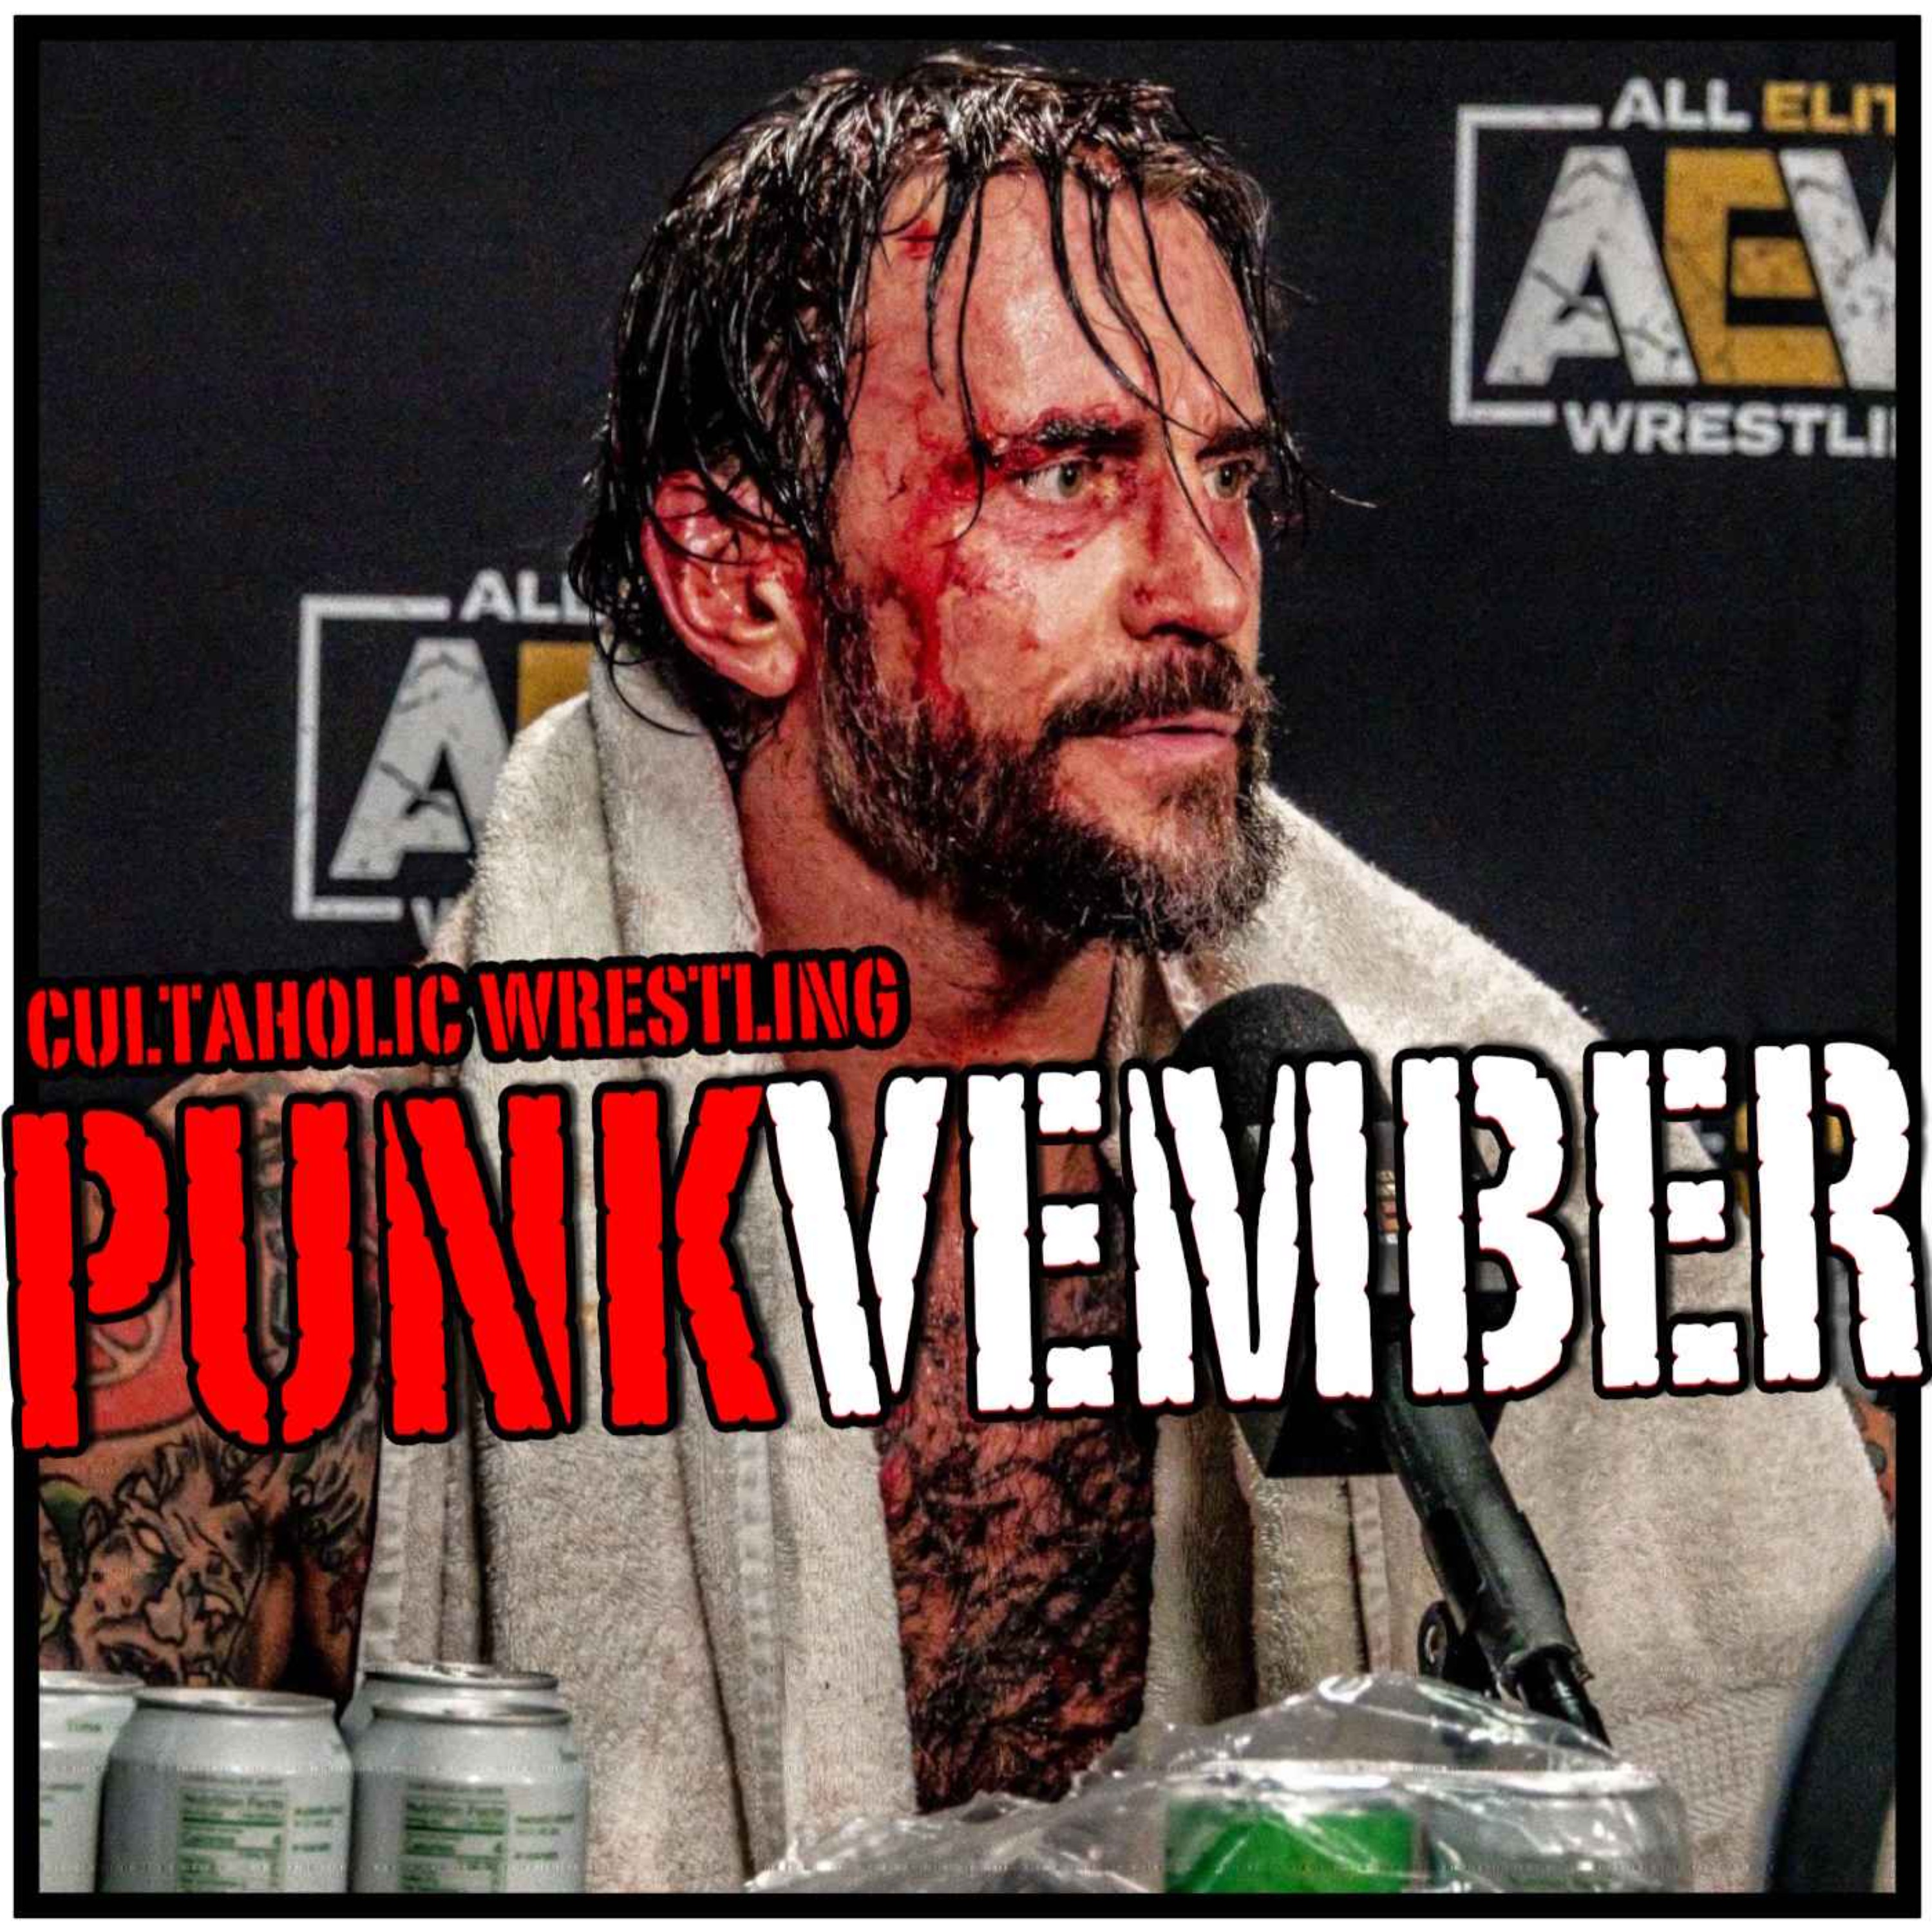 PUNKVEMBER: The CM Punk AEW Story - Episode 2 